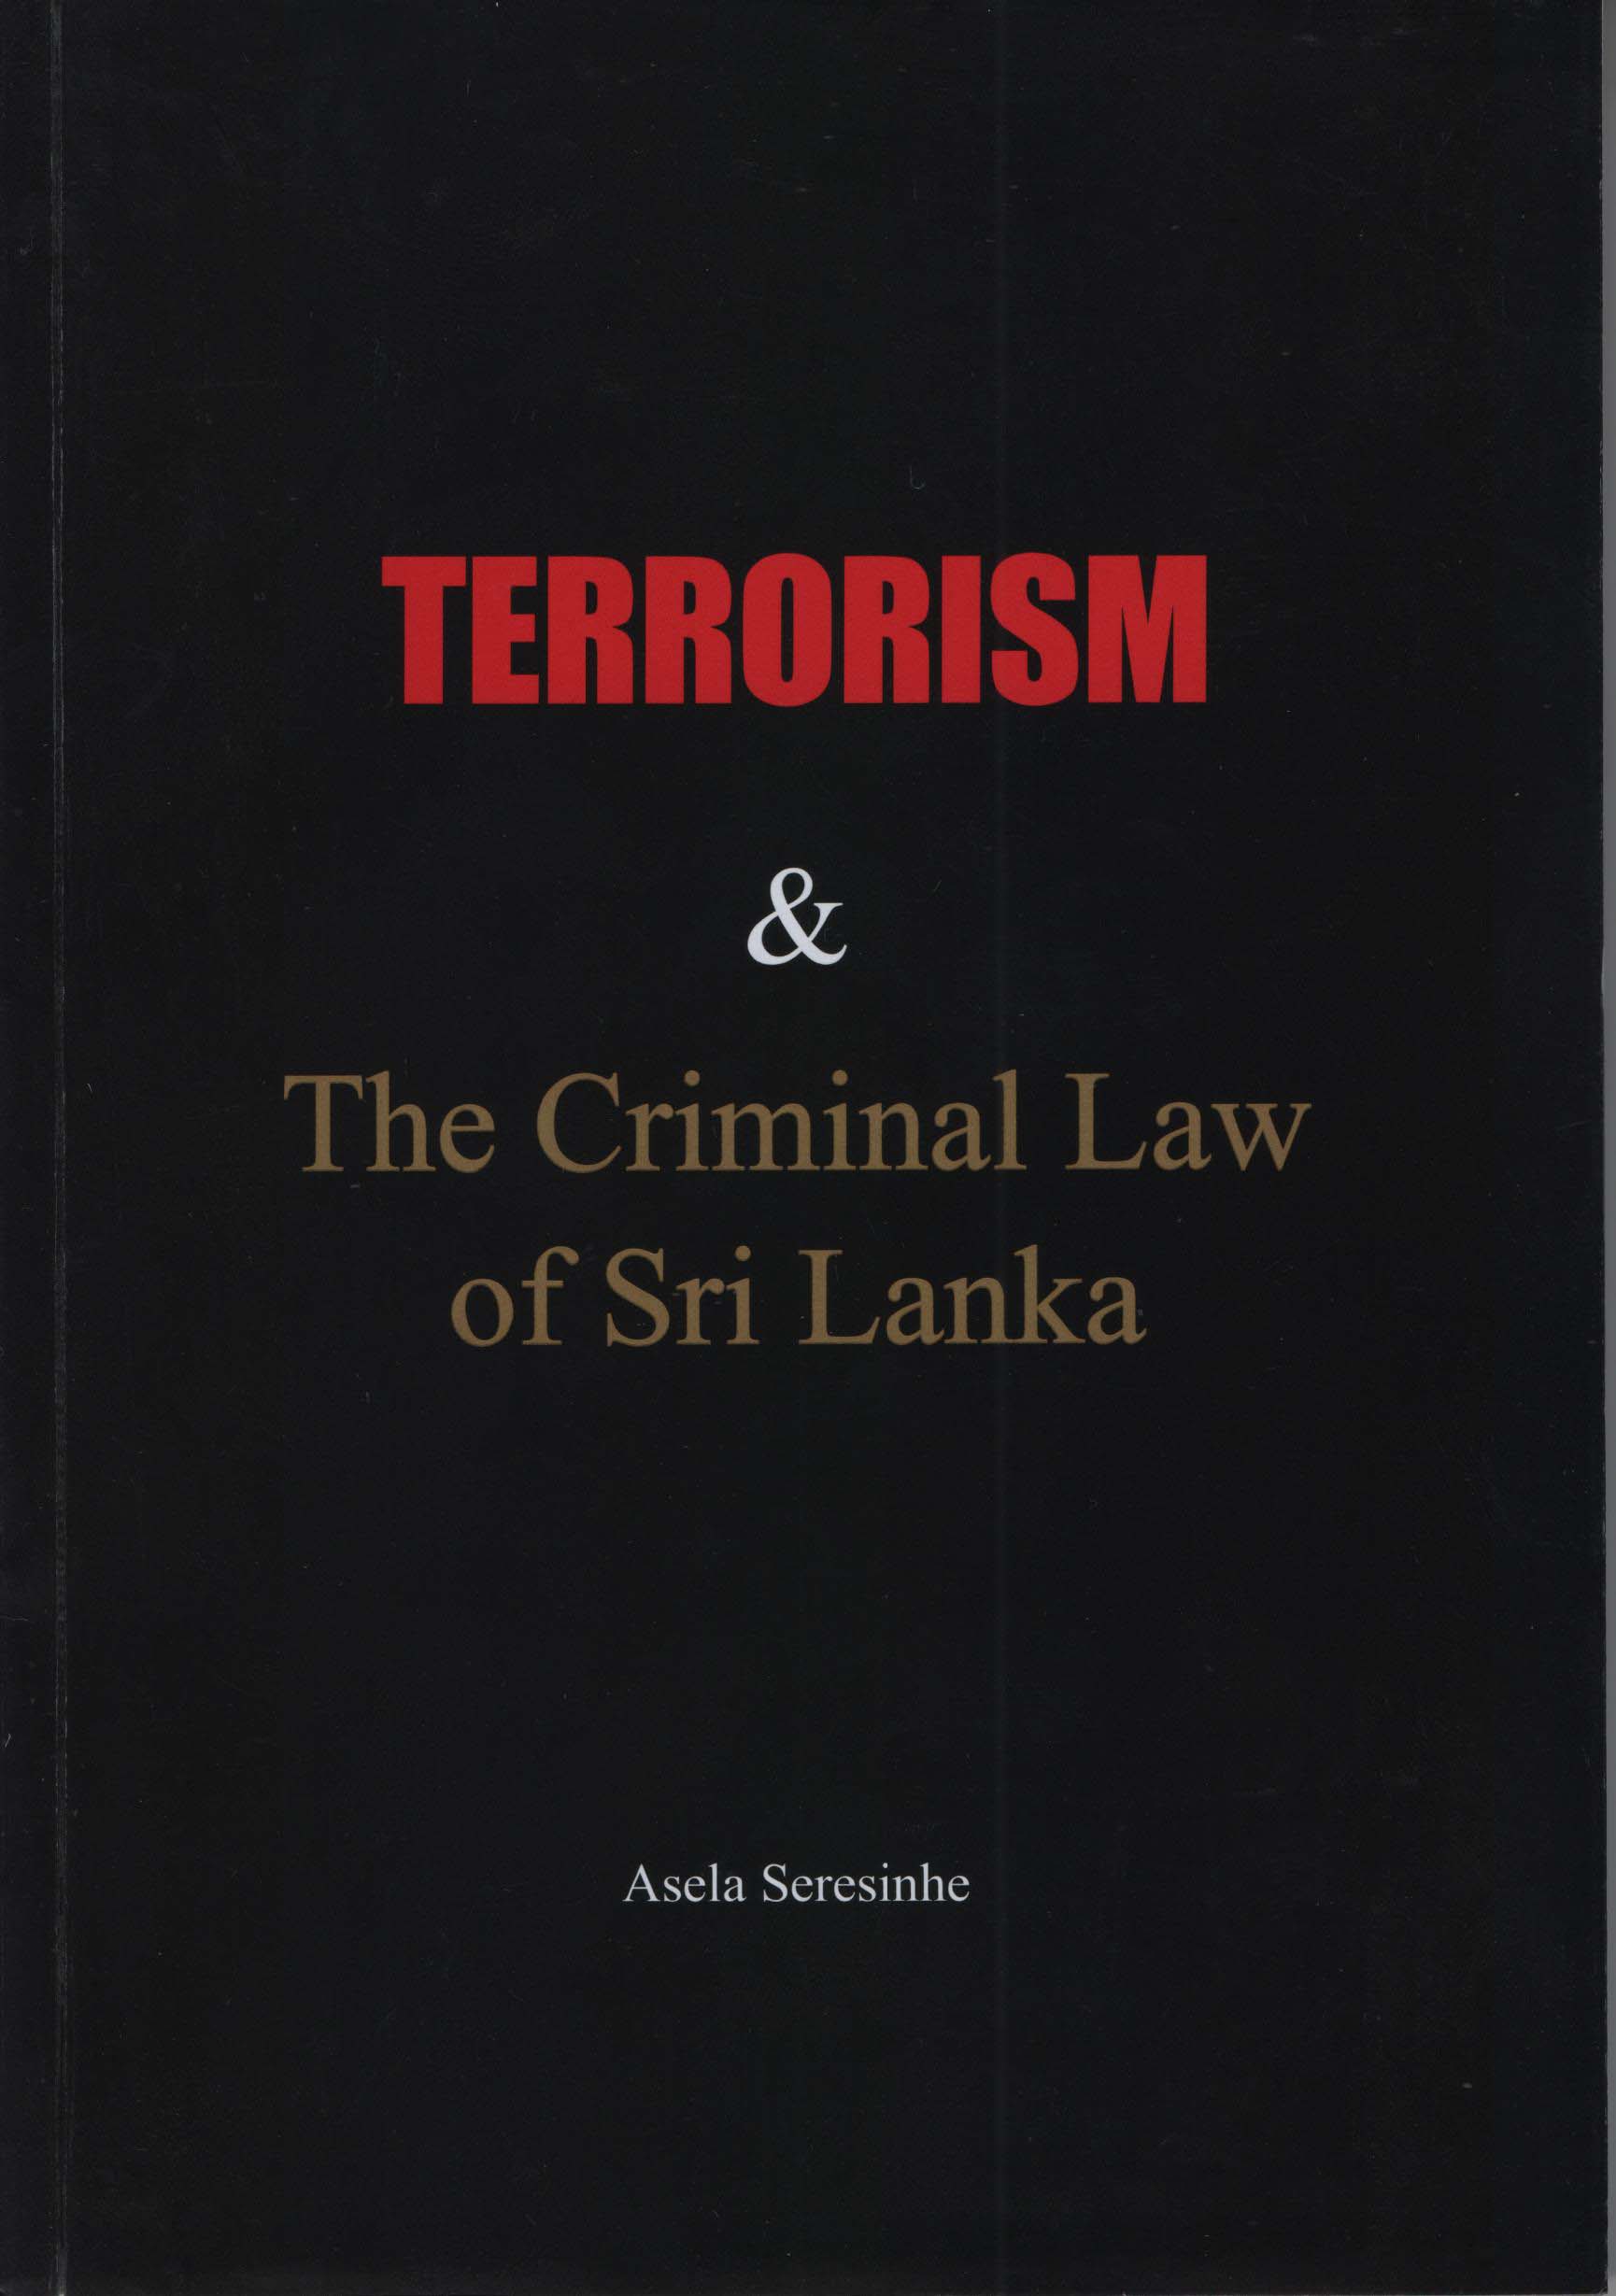 Terrorism & The Criminal Law of Sri Lanka